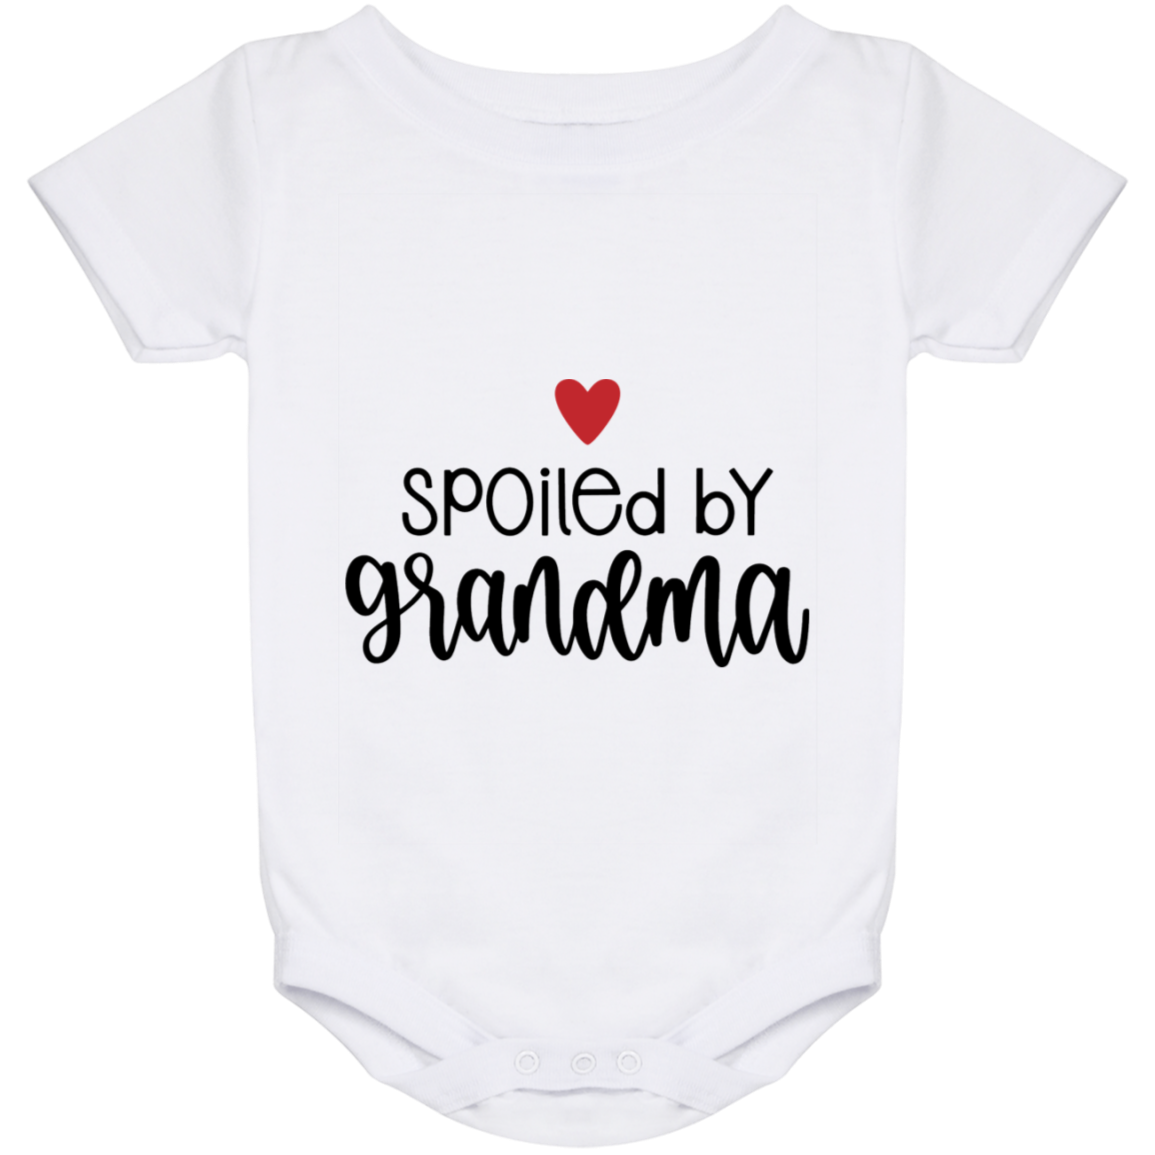 Spoiled by Grandma Baby Onesie 24 Month